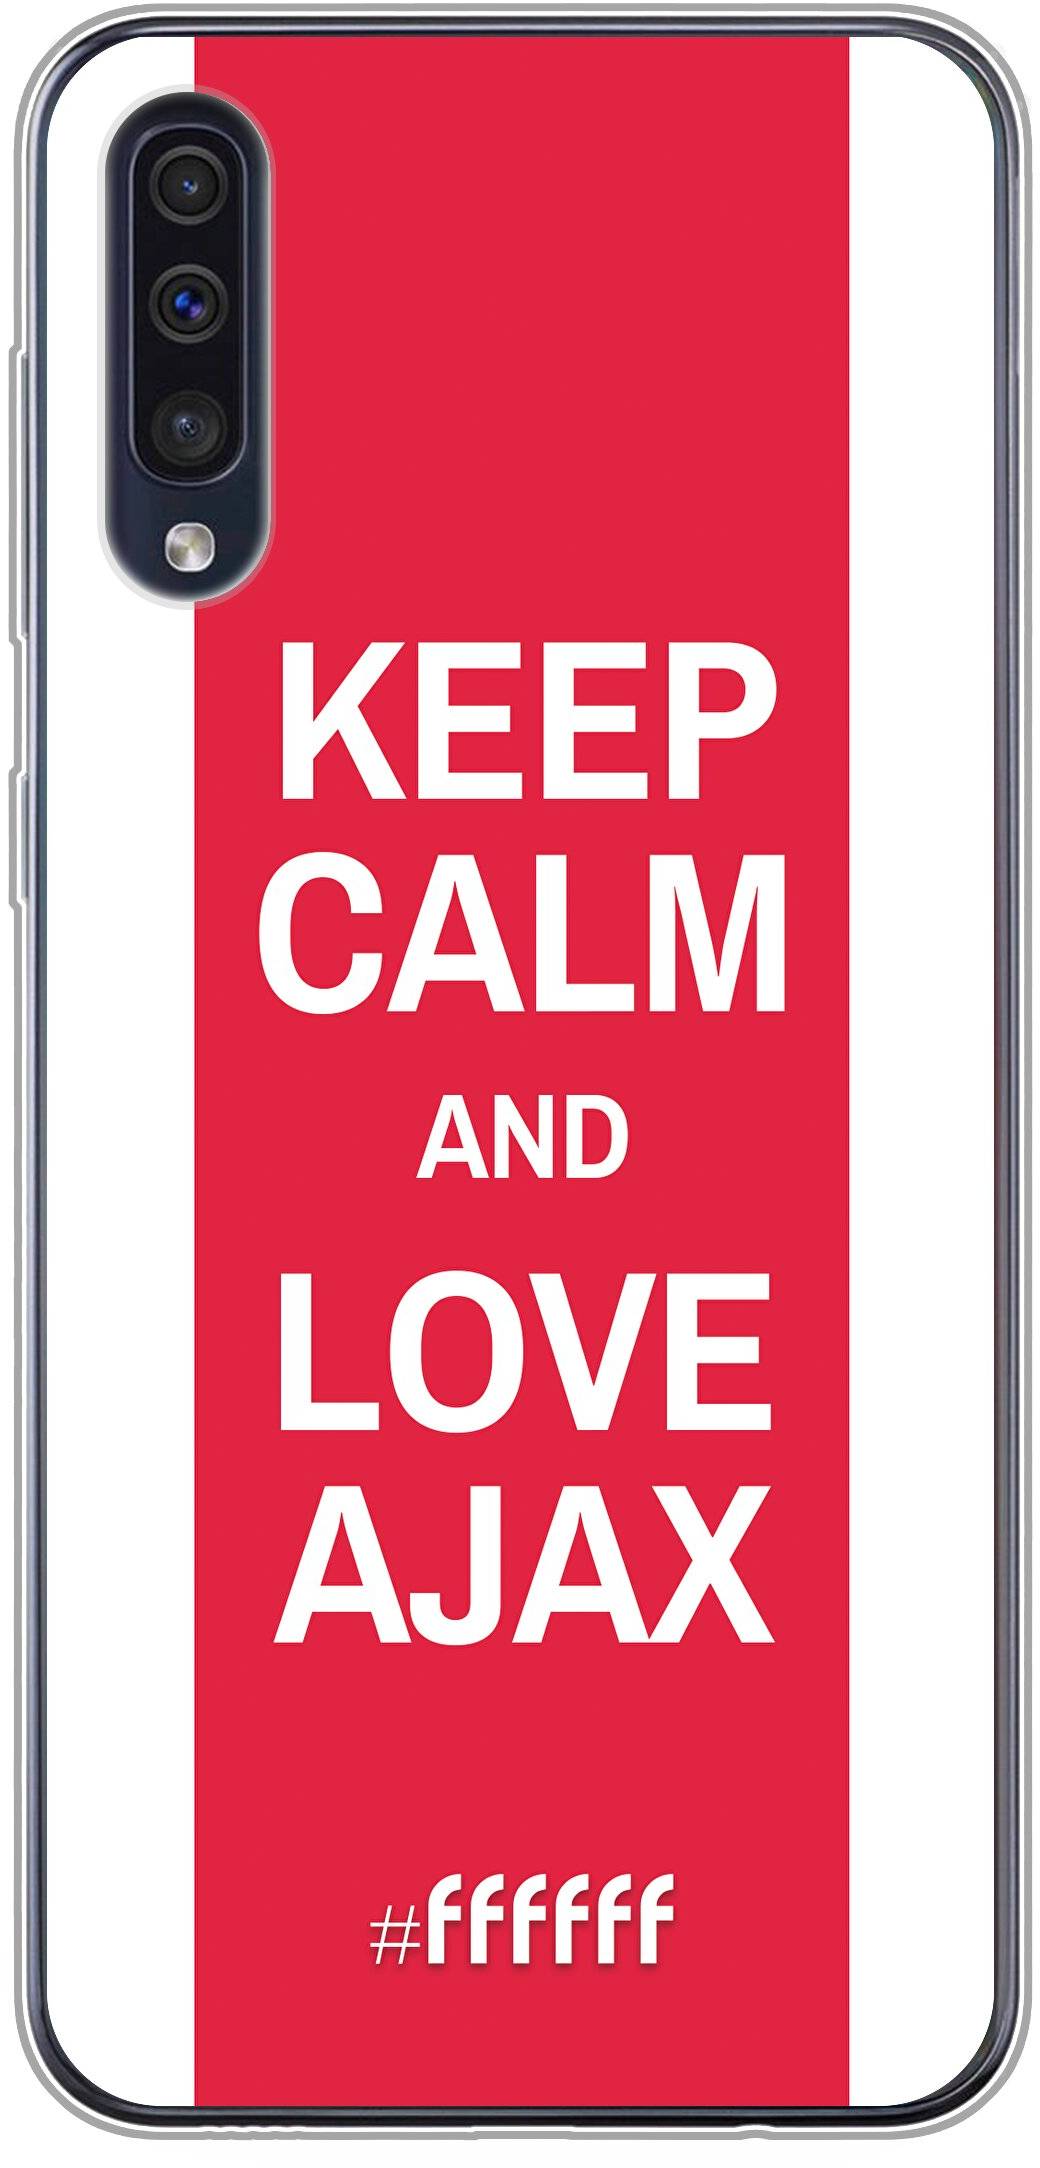 AFC Ajax Keep Calm Galaxy A50